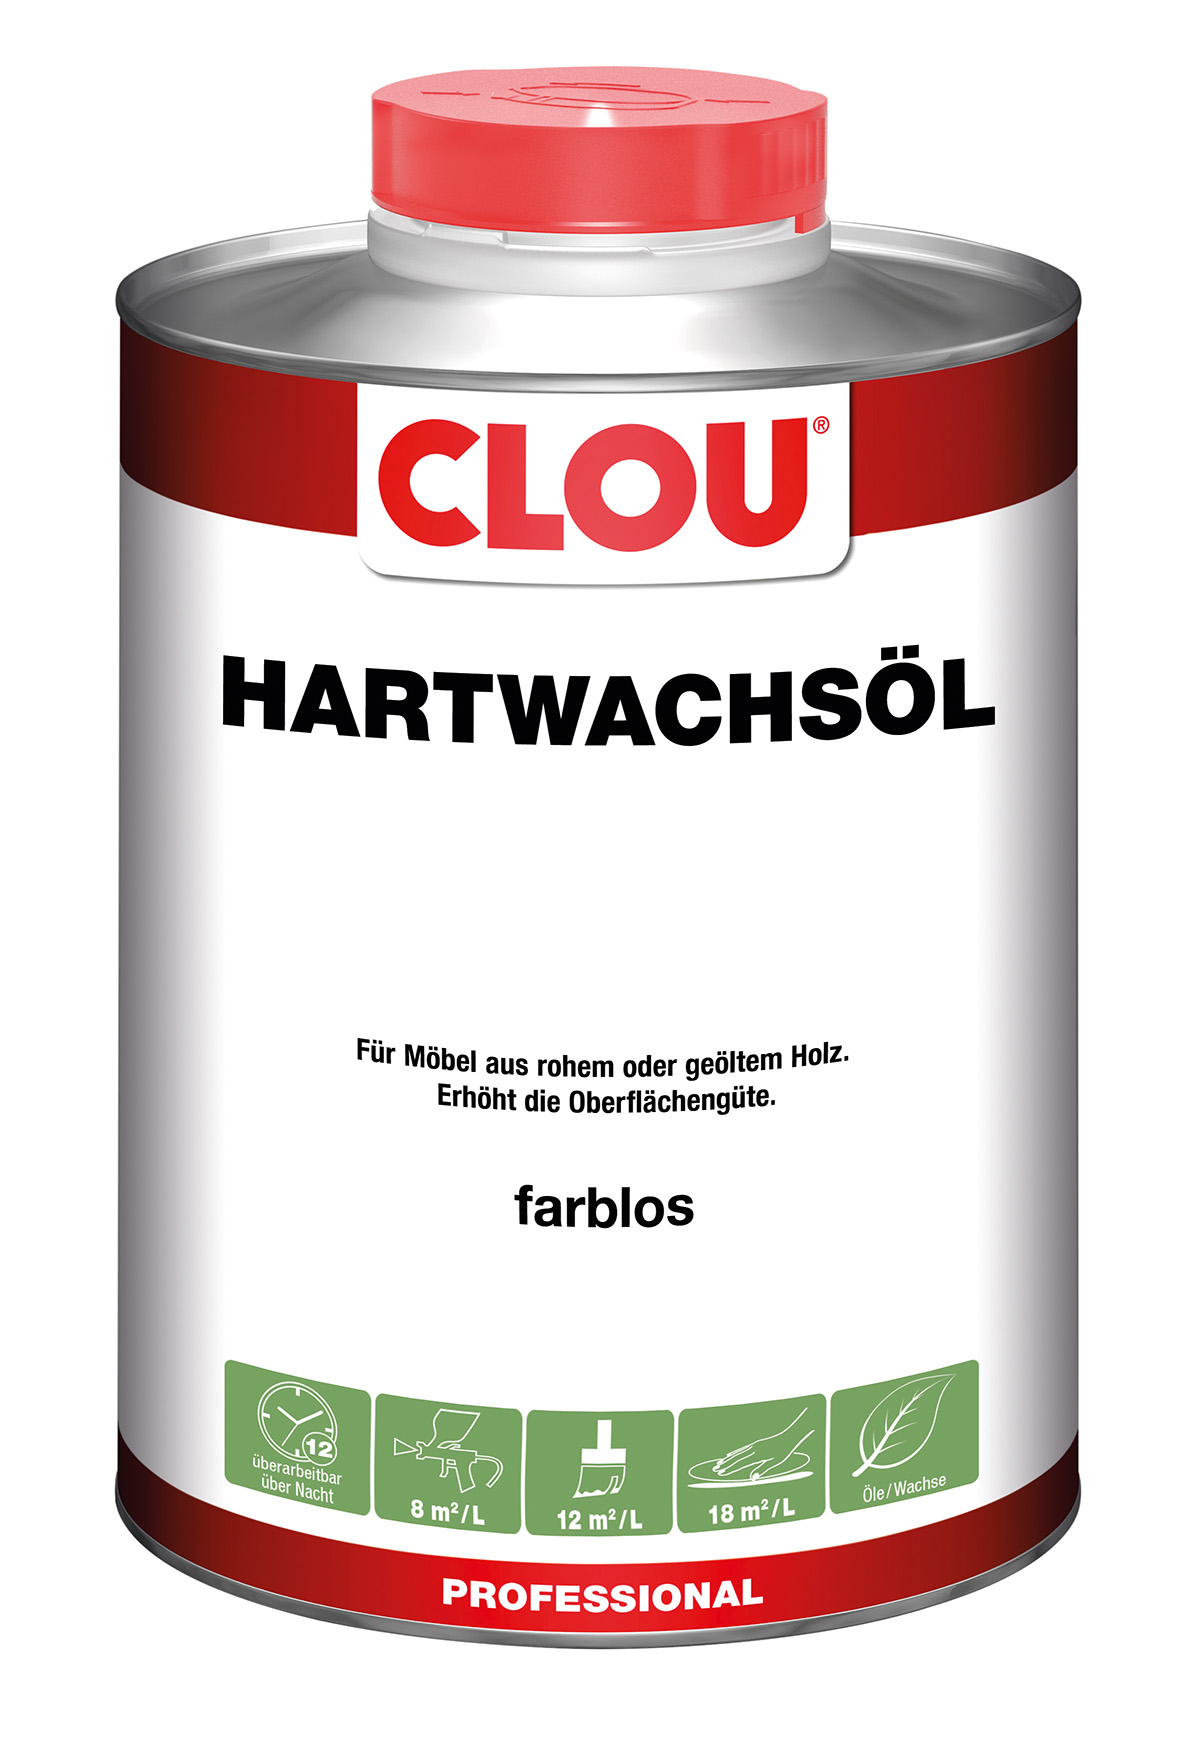 Hartwachs-Öl